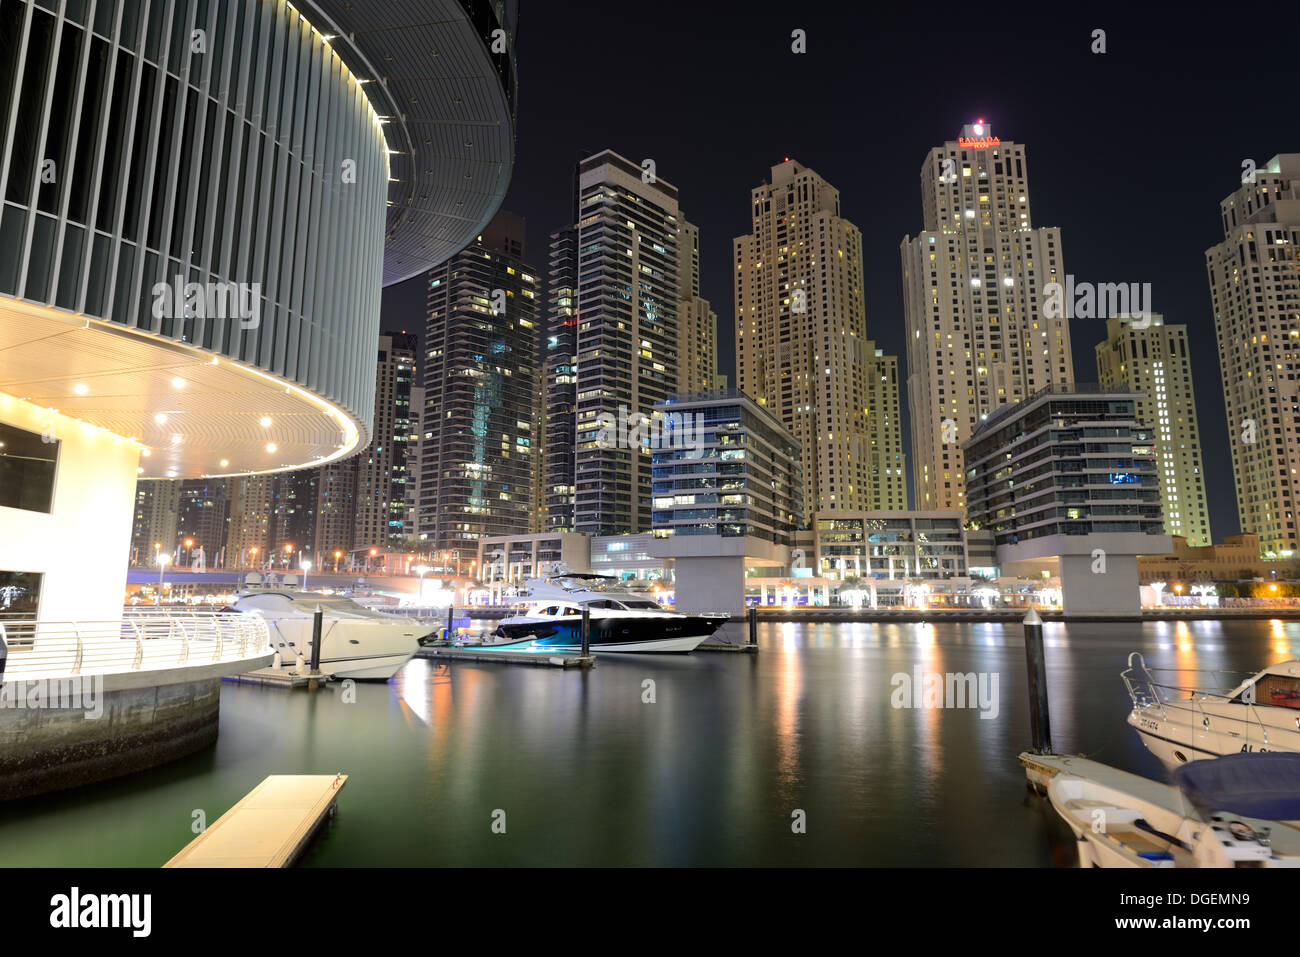 Night illumination at Dubai Marina, UAE Stock Photo